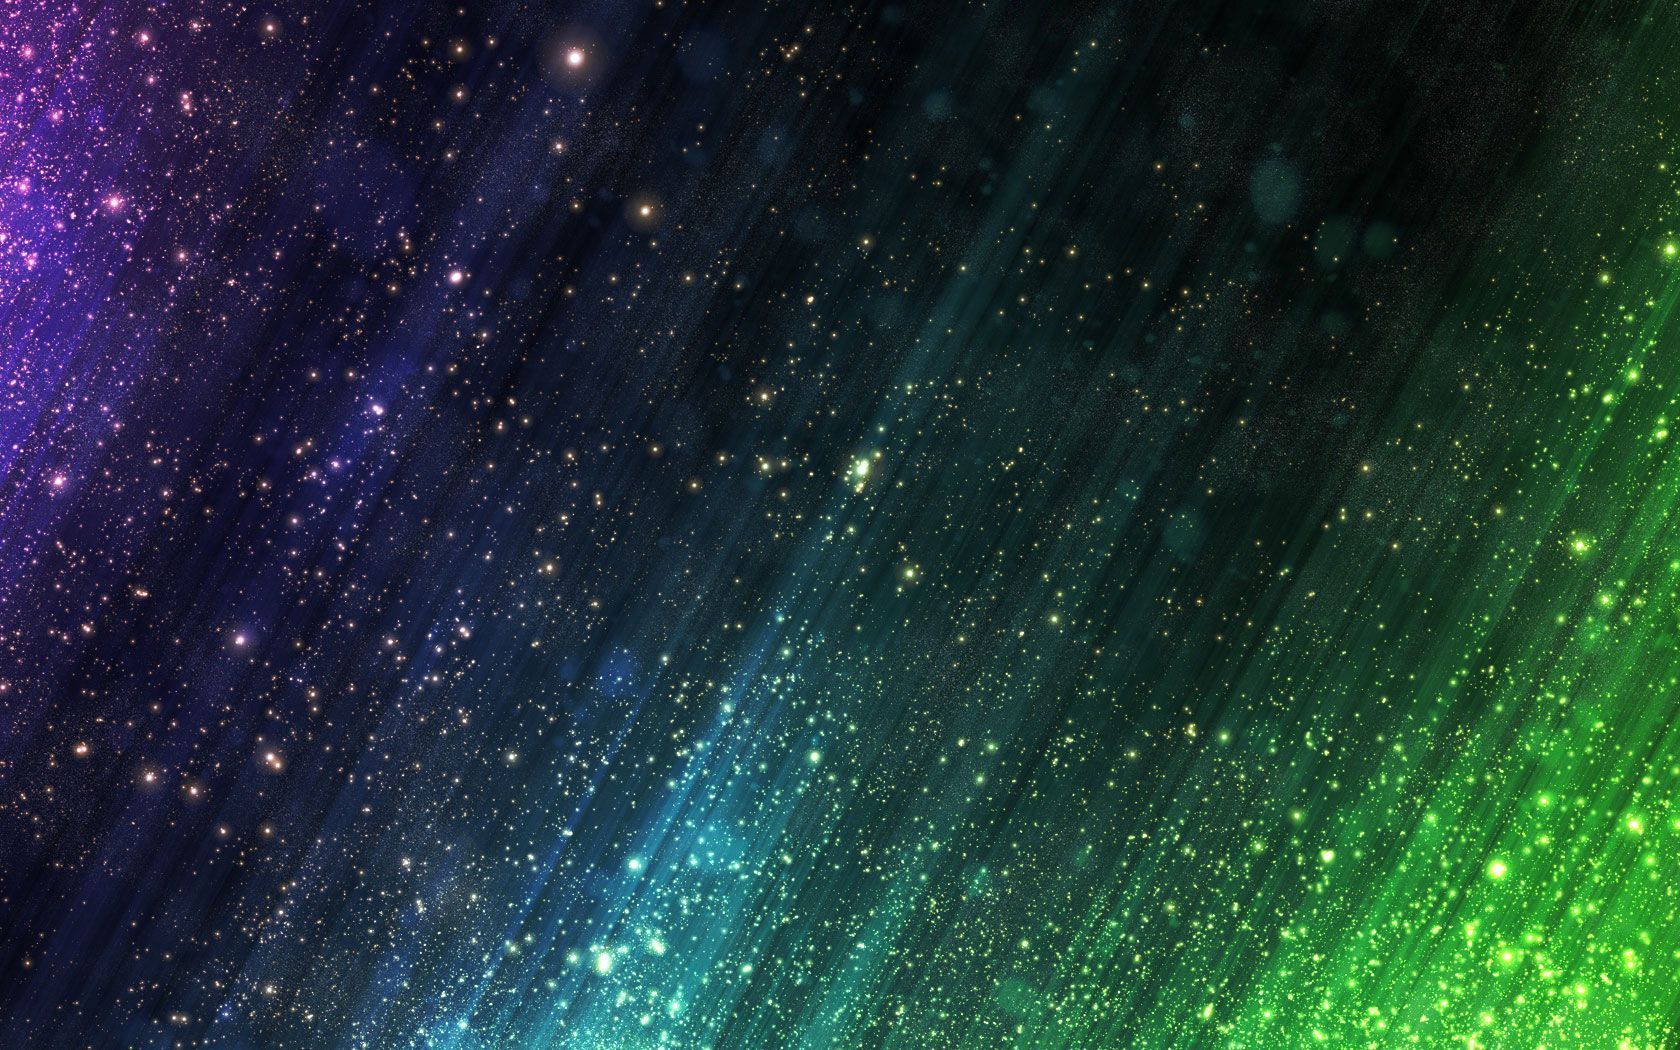 Green Galaxy Wallpapers